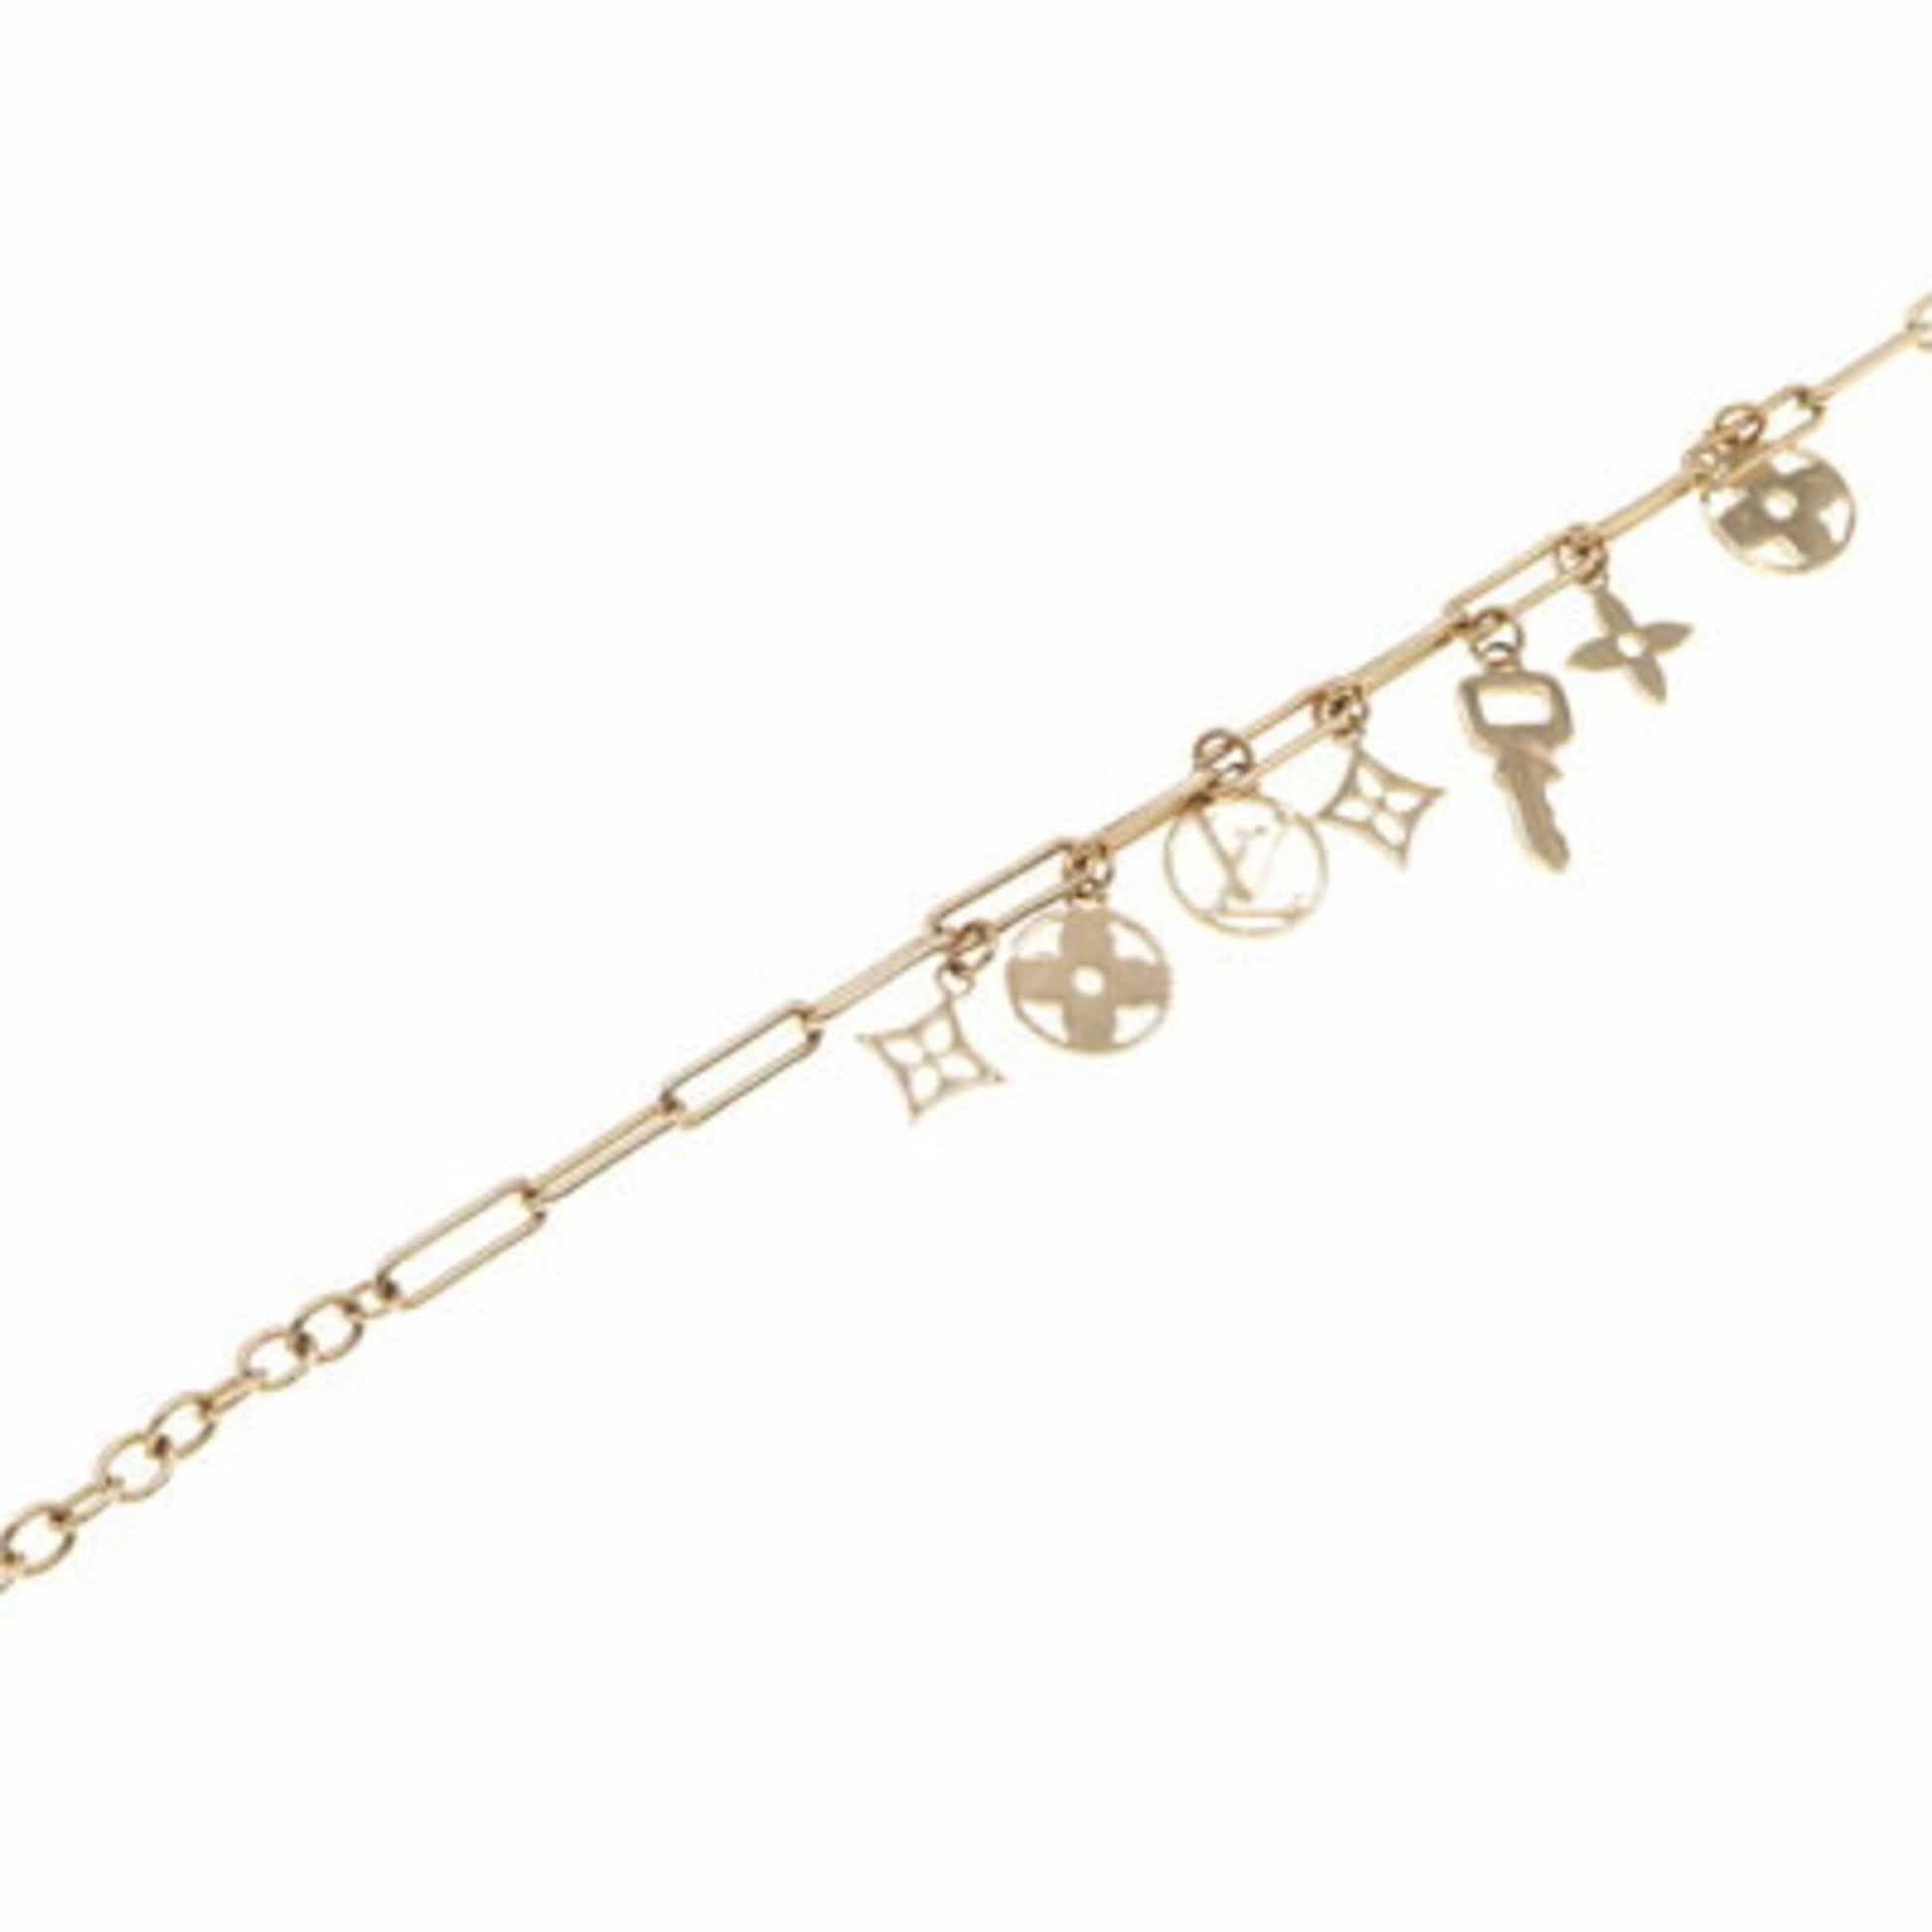 Louis Vuitton Bracelet Brasserie Roman Holiday Gold M80273 Free